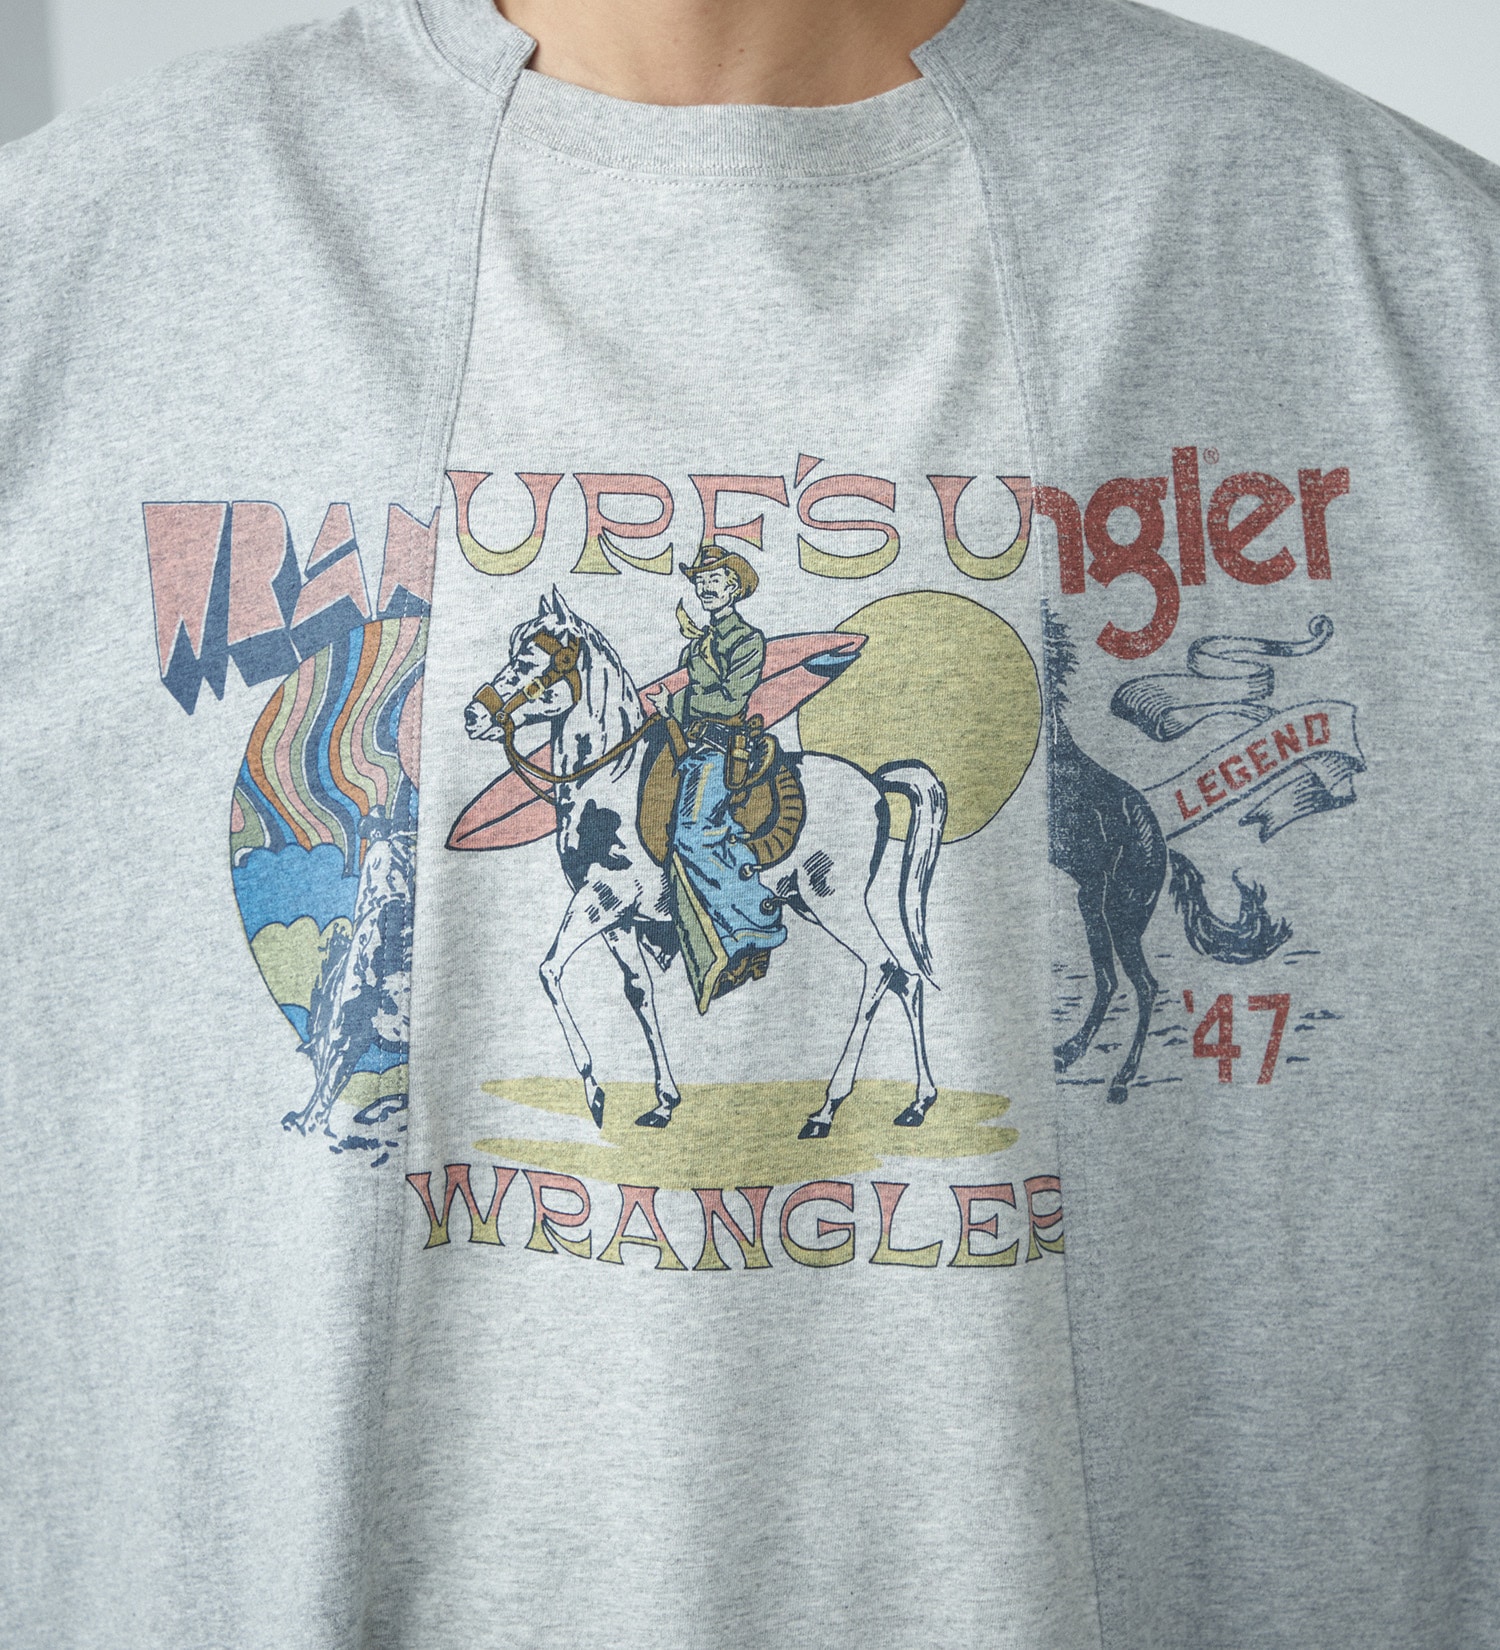 Wrangler(ラングラー)のリメイク ショートスリーブTee|トップス/Tシャツ/カットソー/メンズ|グレー